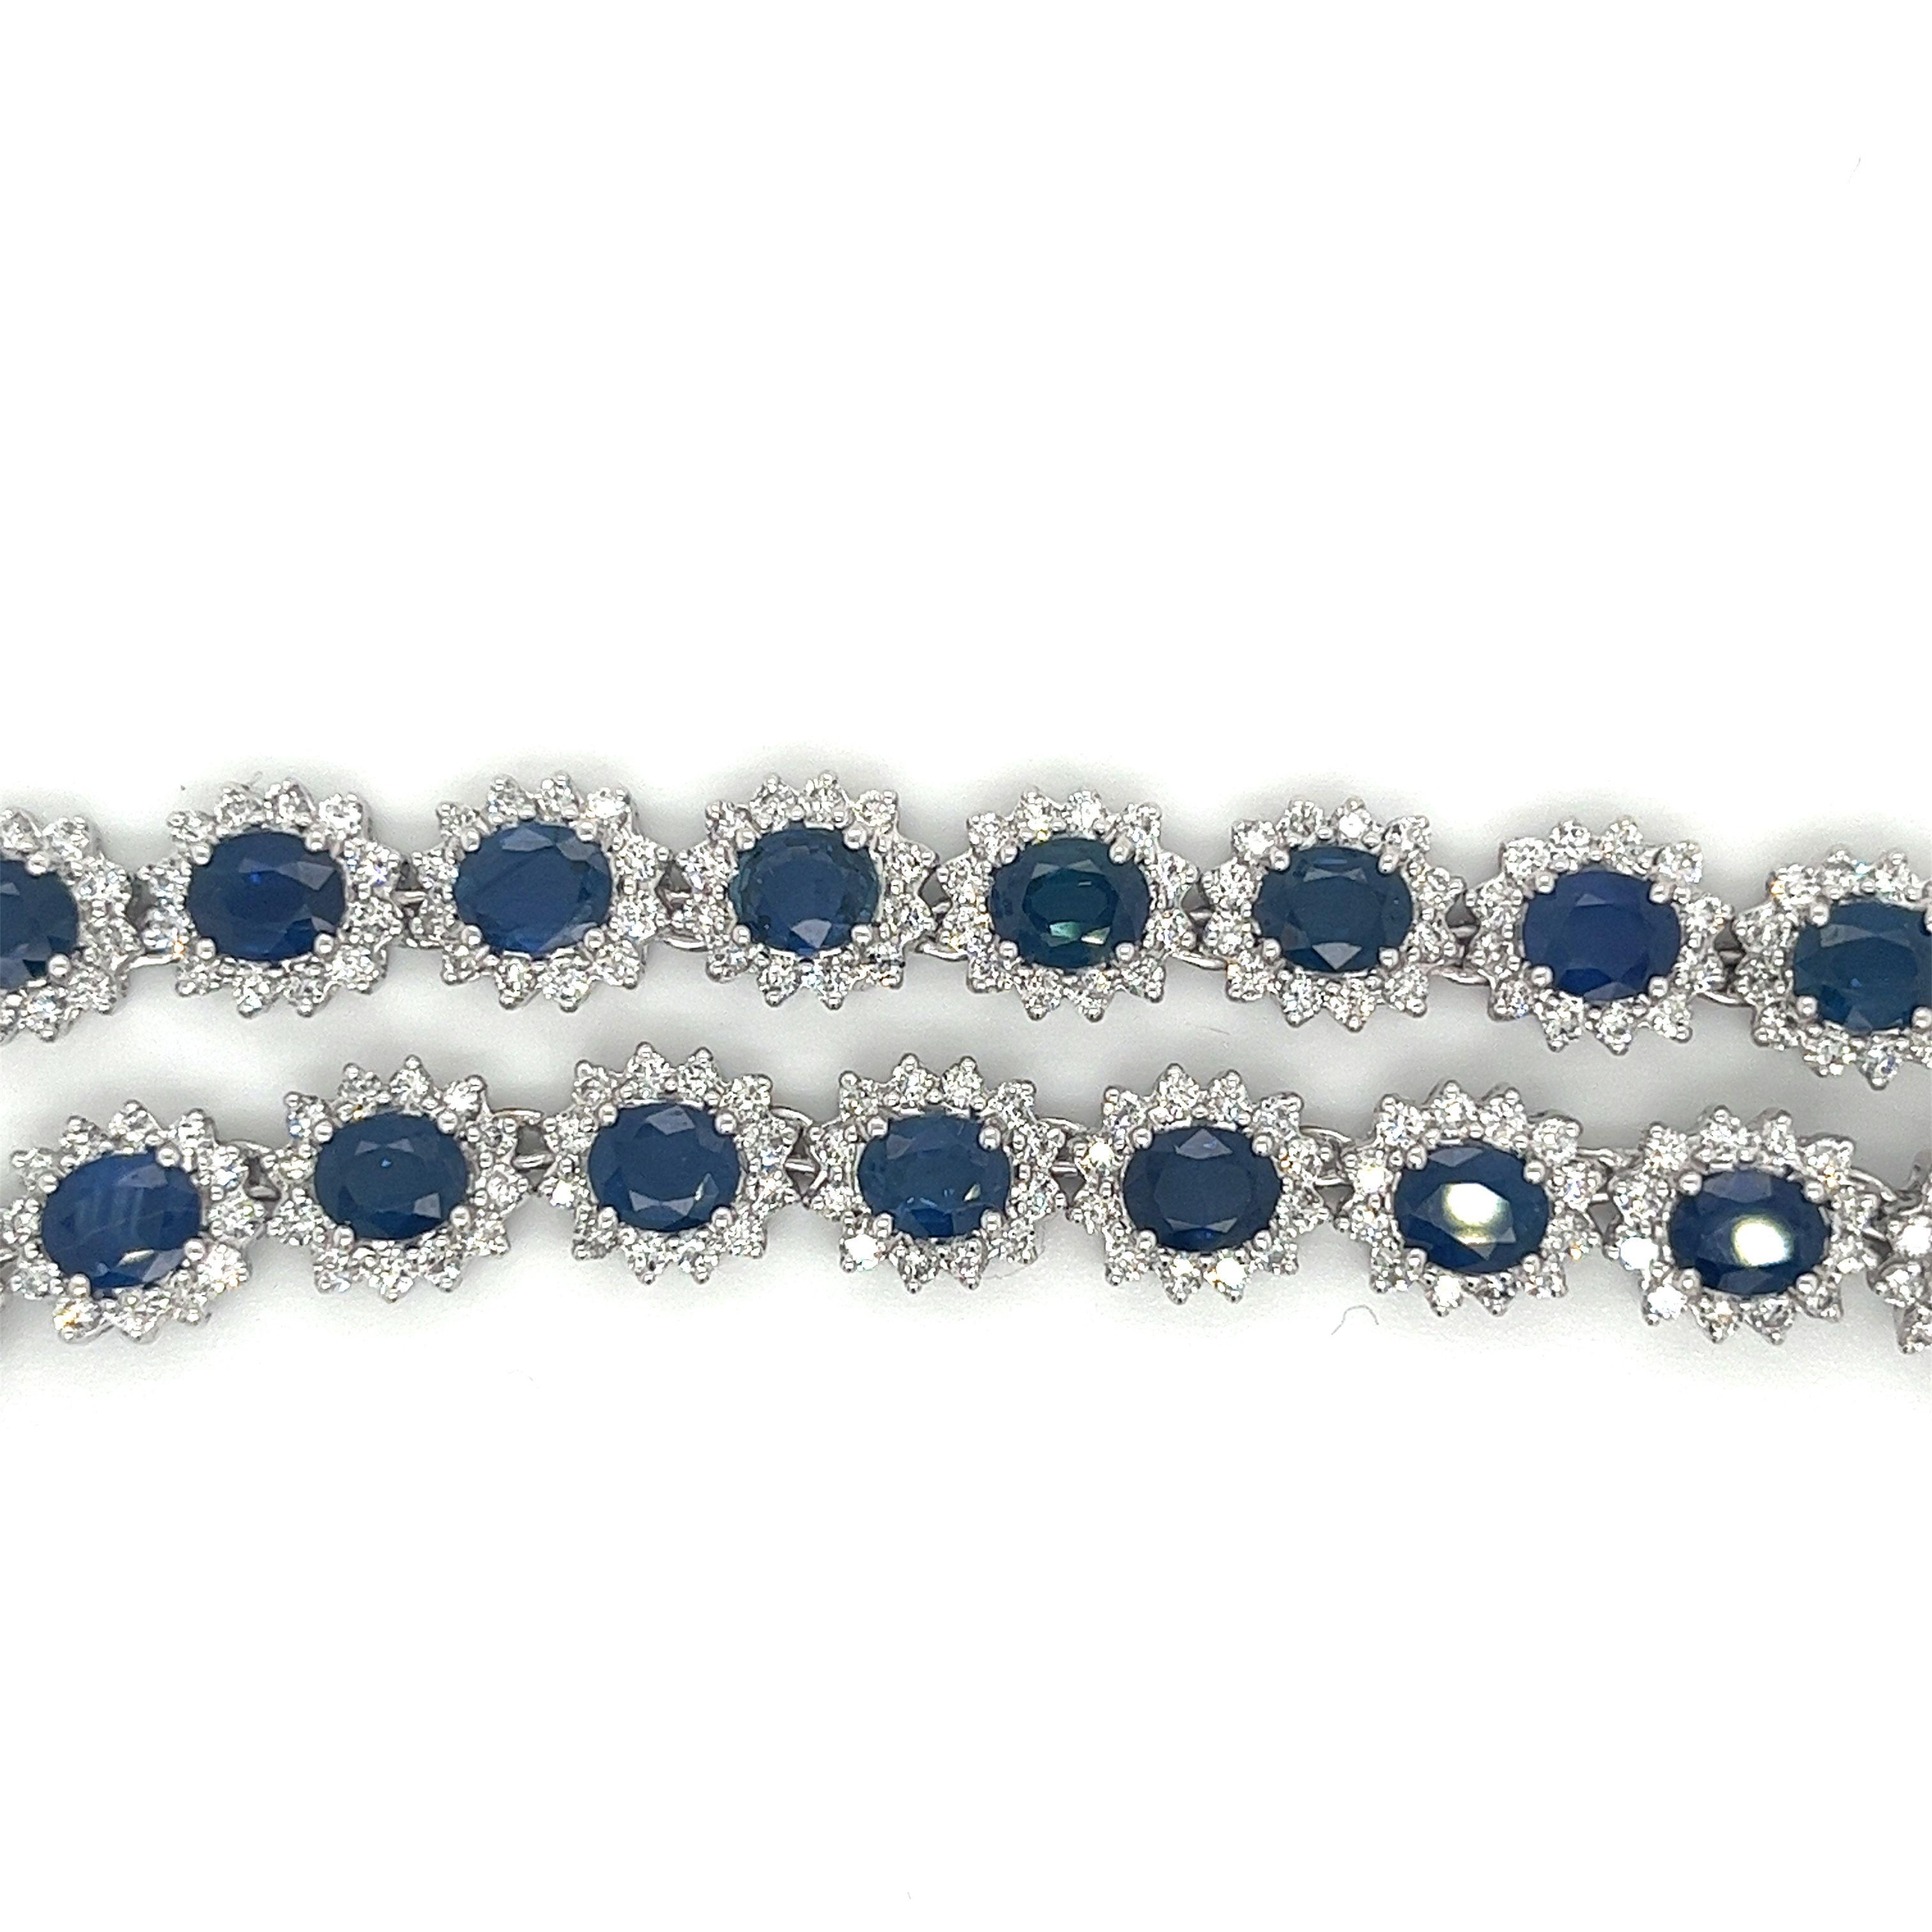 Women's 36 Carat Oval Cut Blue Sapphire & Diamond Halo Choker Necklace in 18k White Gold For Sale